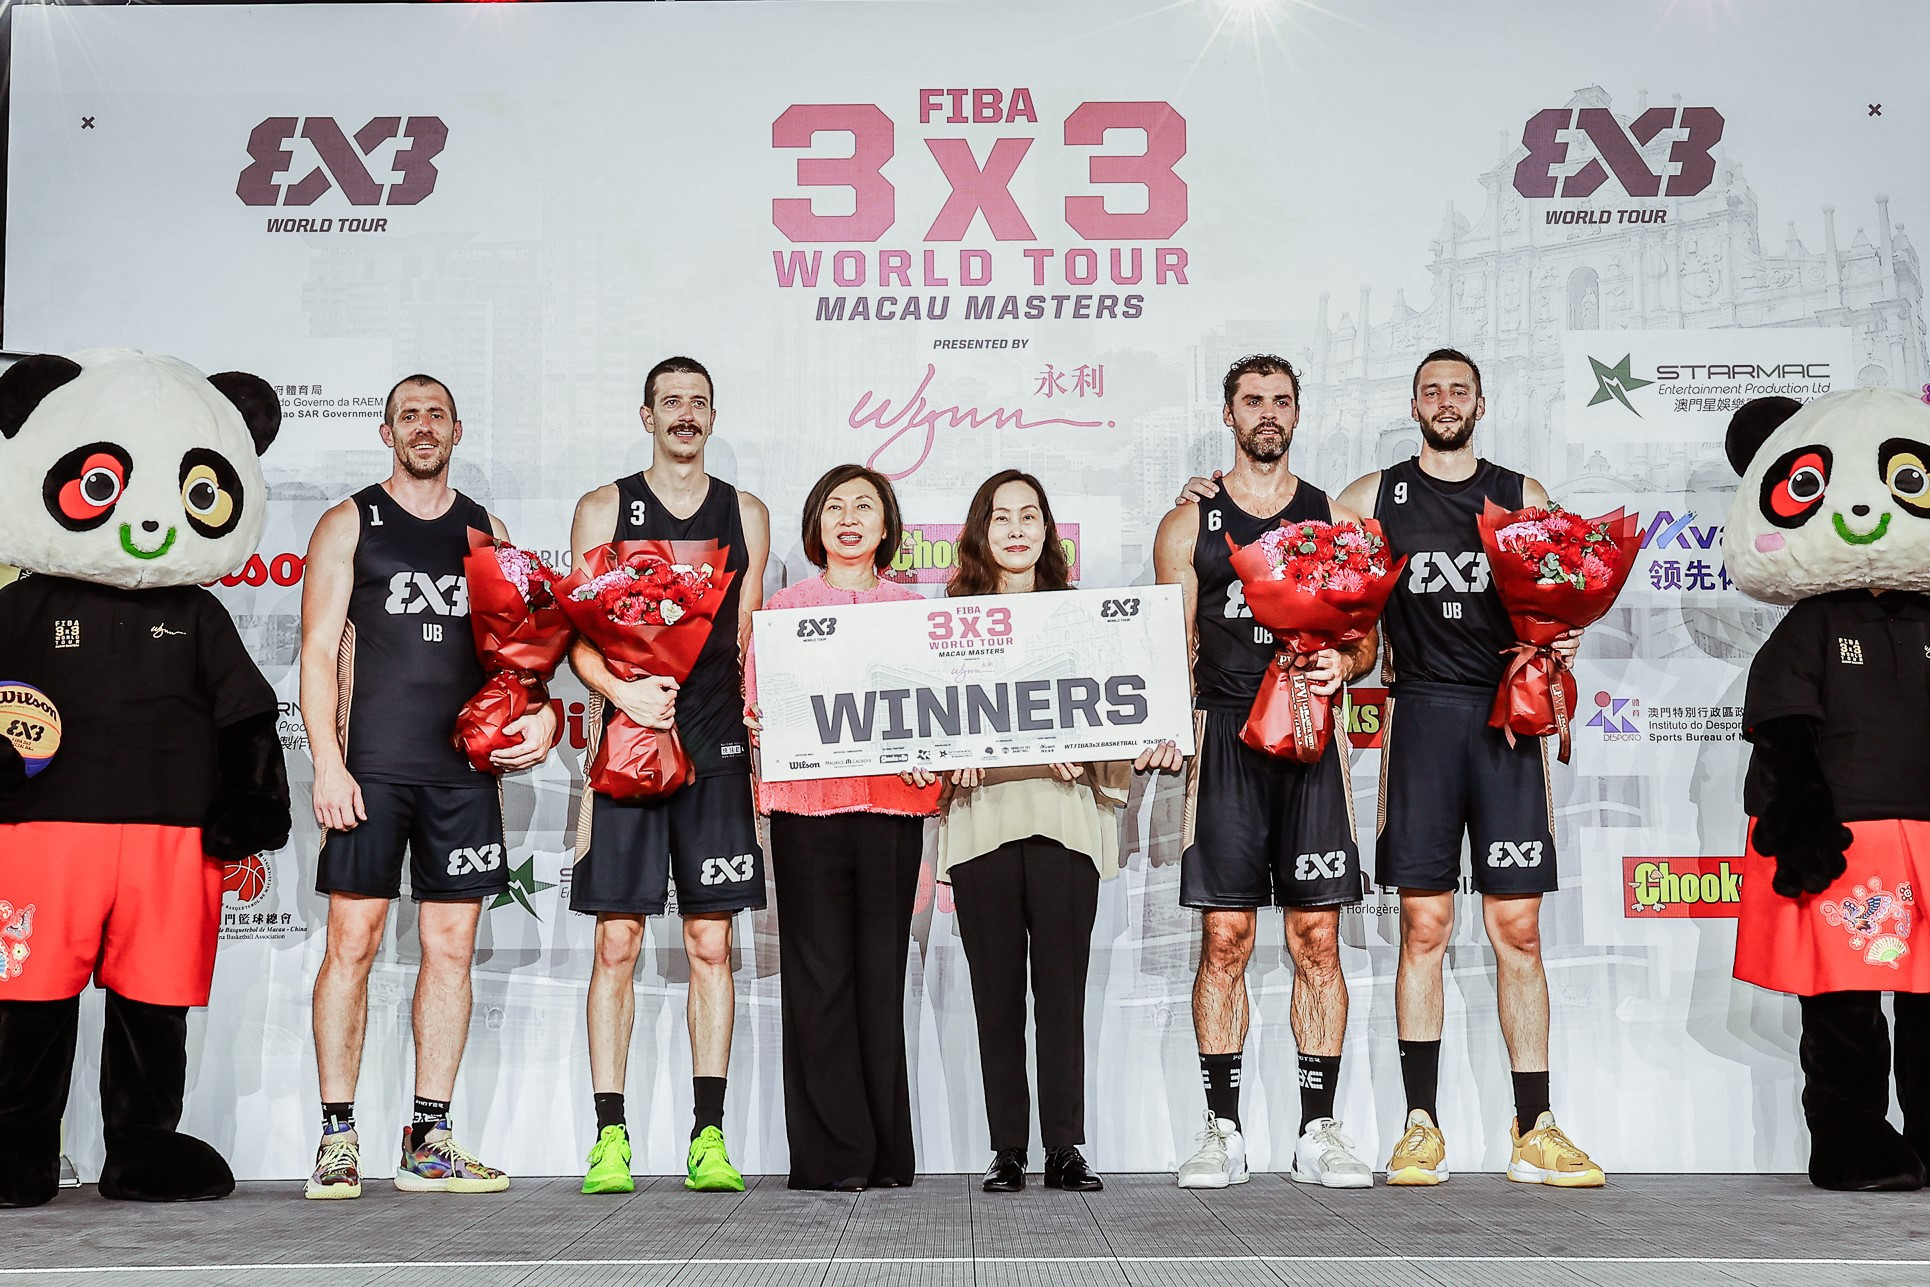 Ub win record-equalling fourth straight FIBA 3x3 World Tour event at start of season in Macau